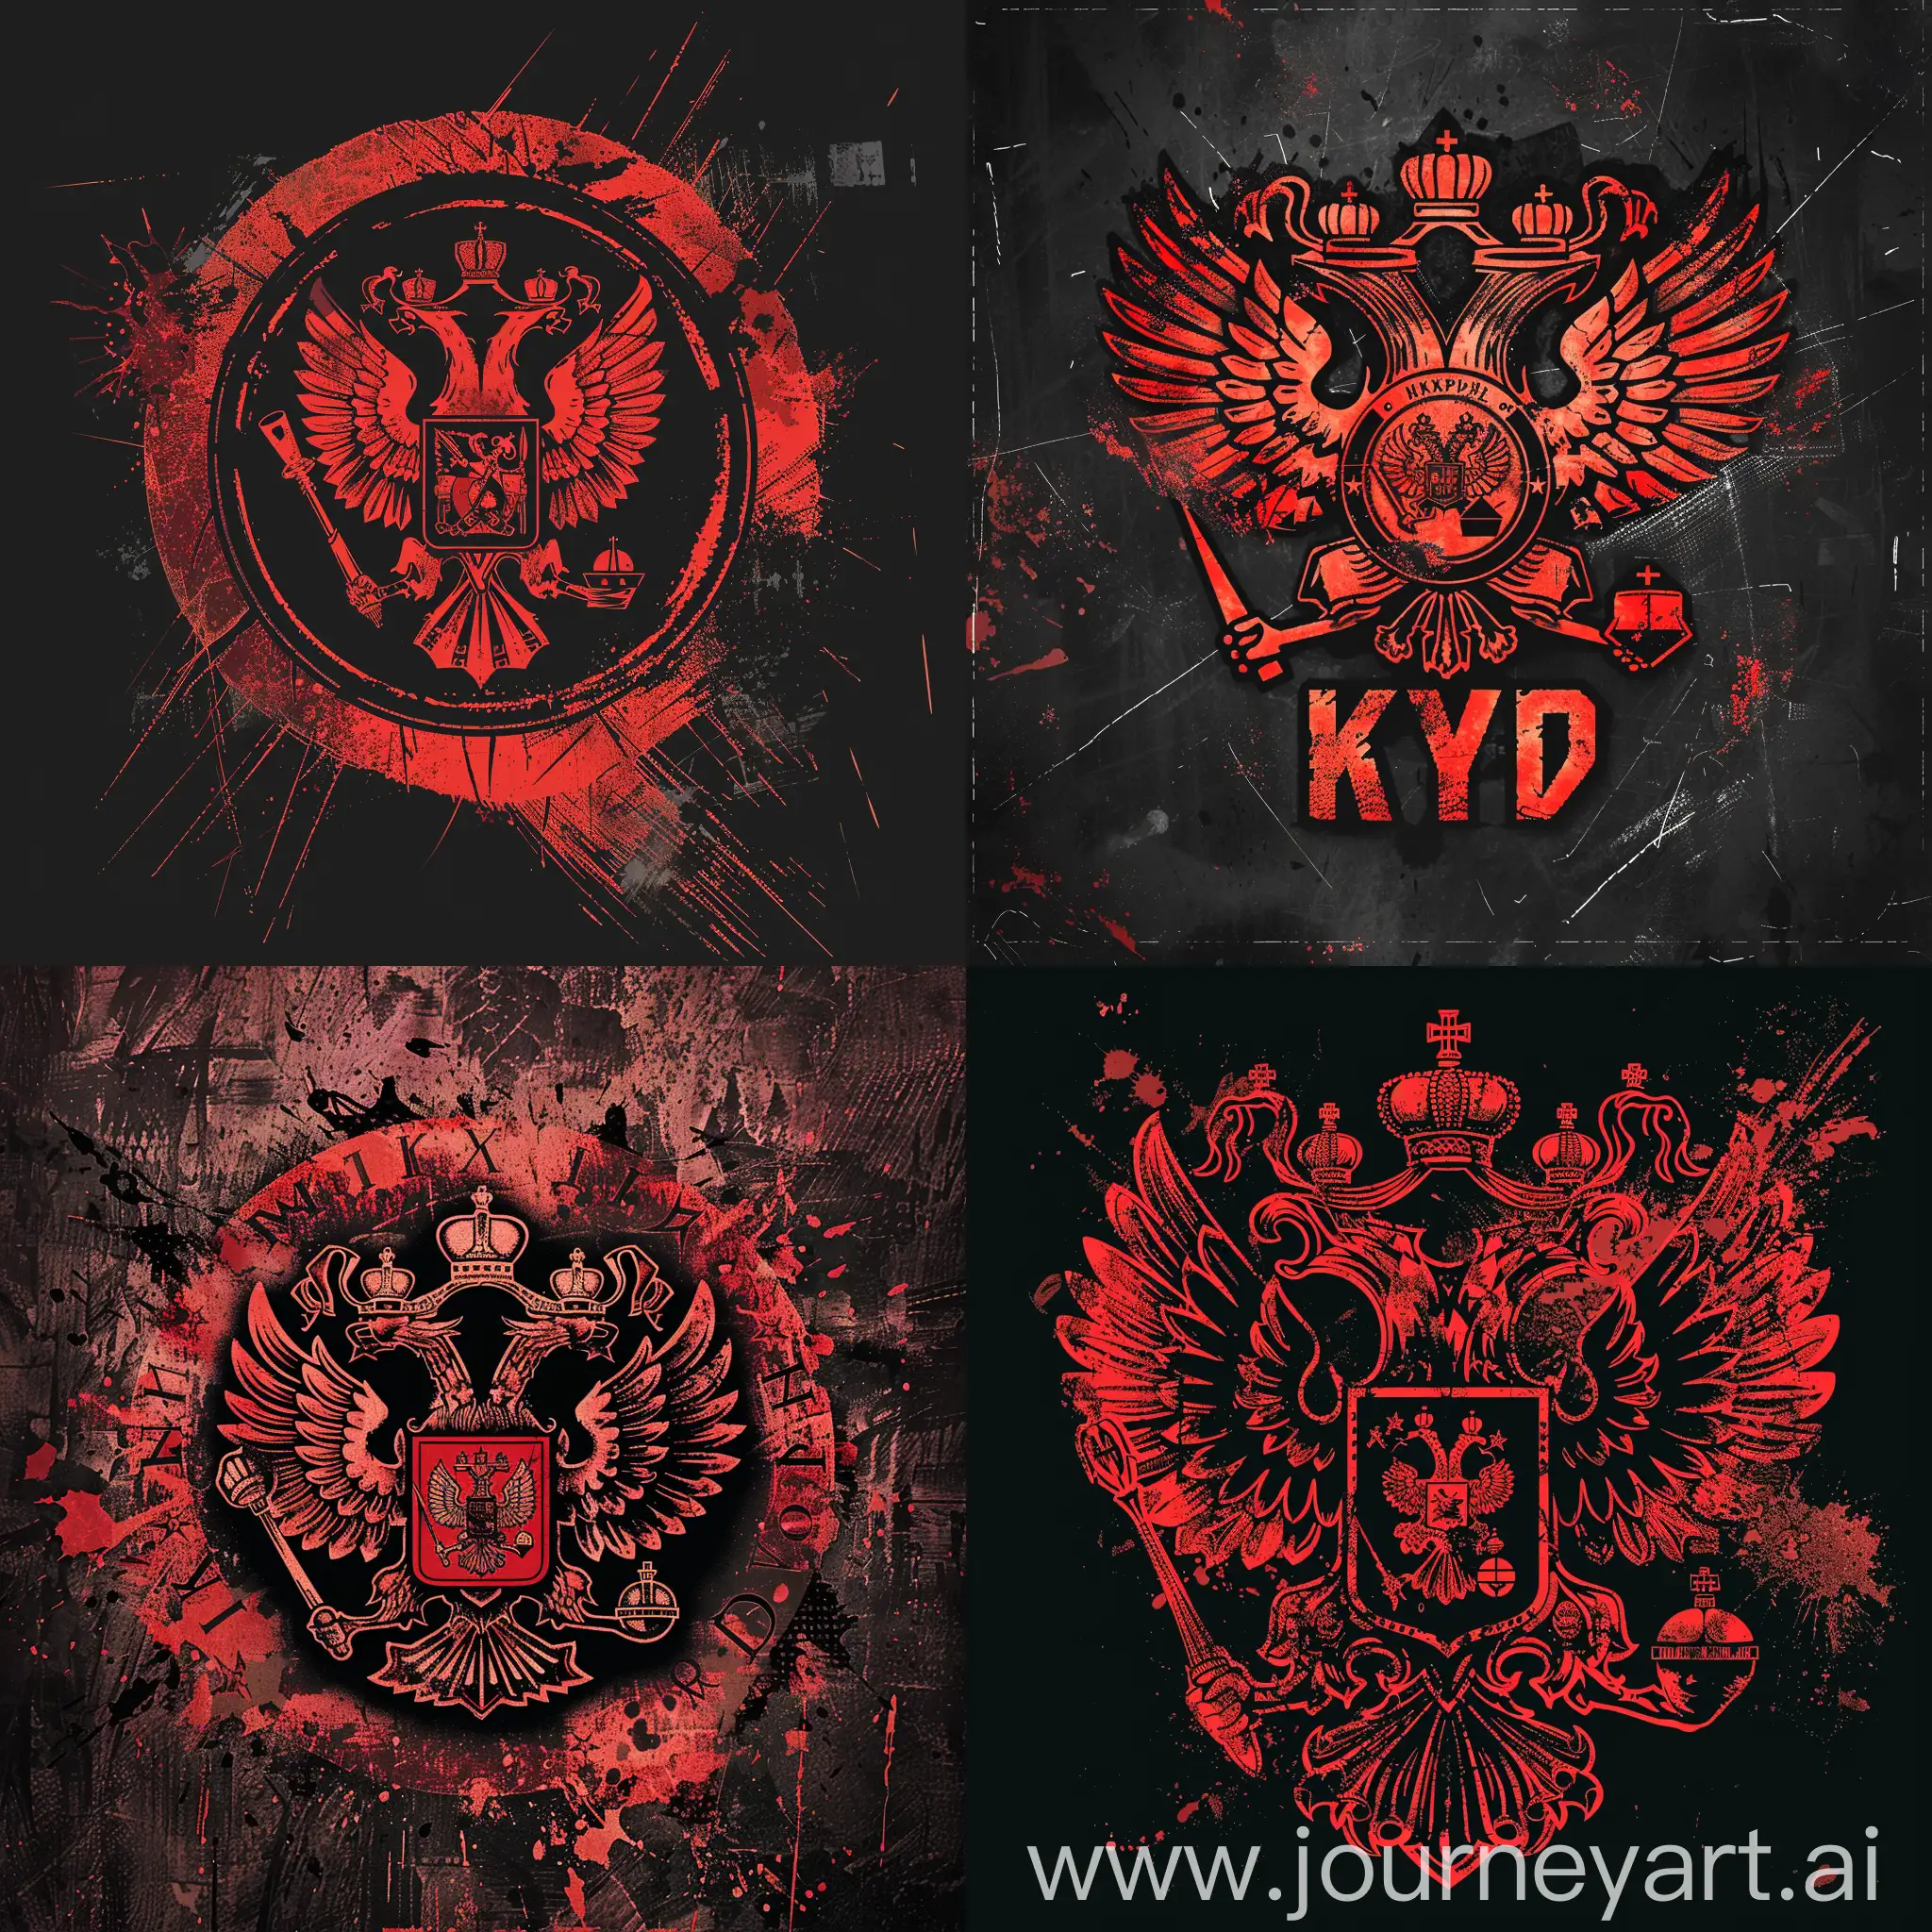 Symbolic-NKVD-Emblem-in-Striking-Red-and-Black-Colors